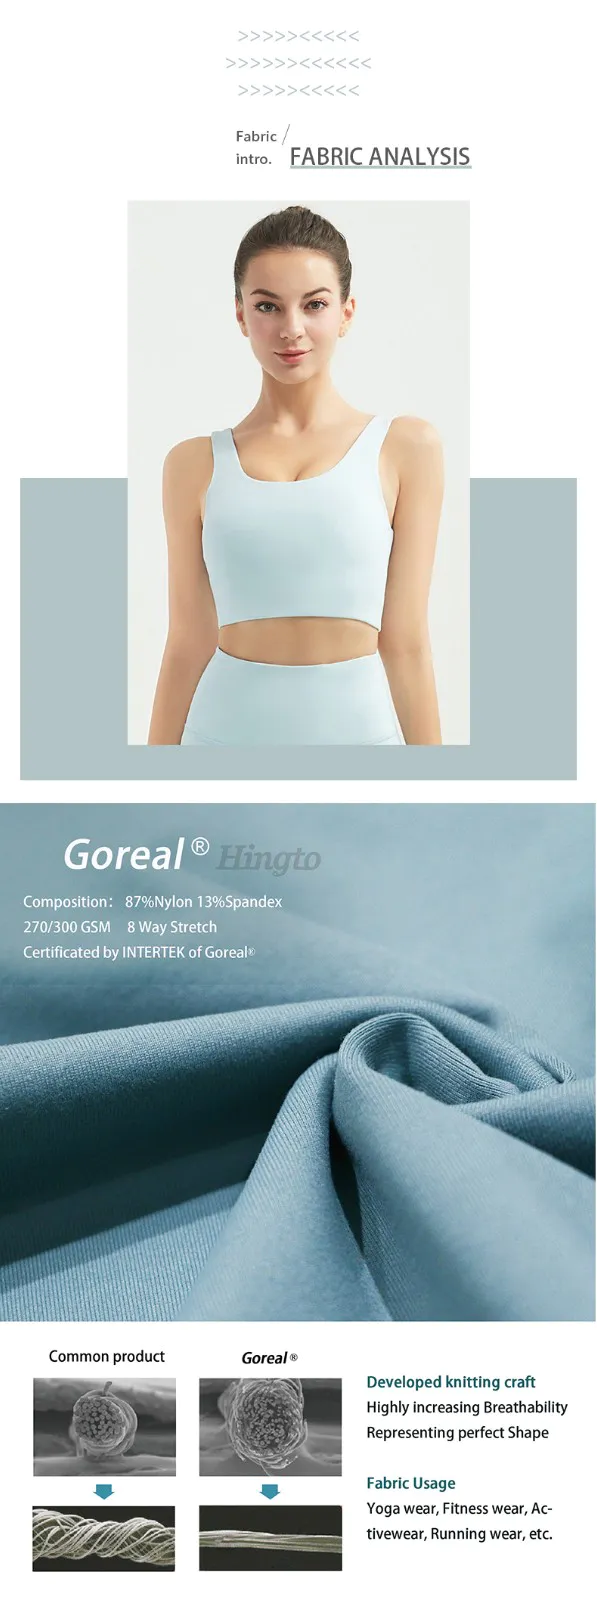 INGOR yoga wear for ladies for manufacturer for gym